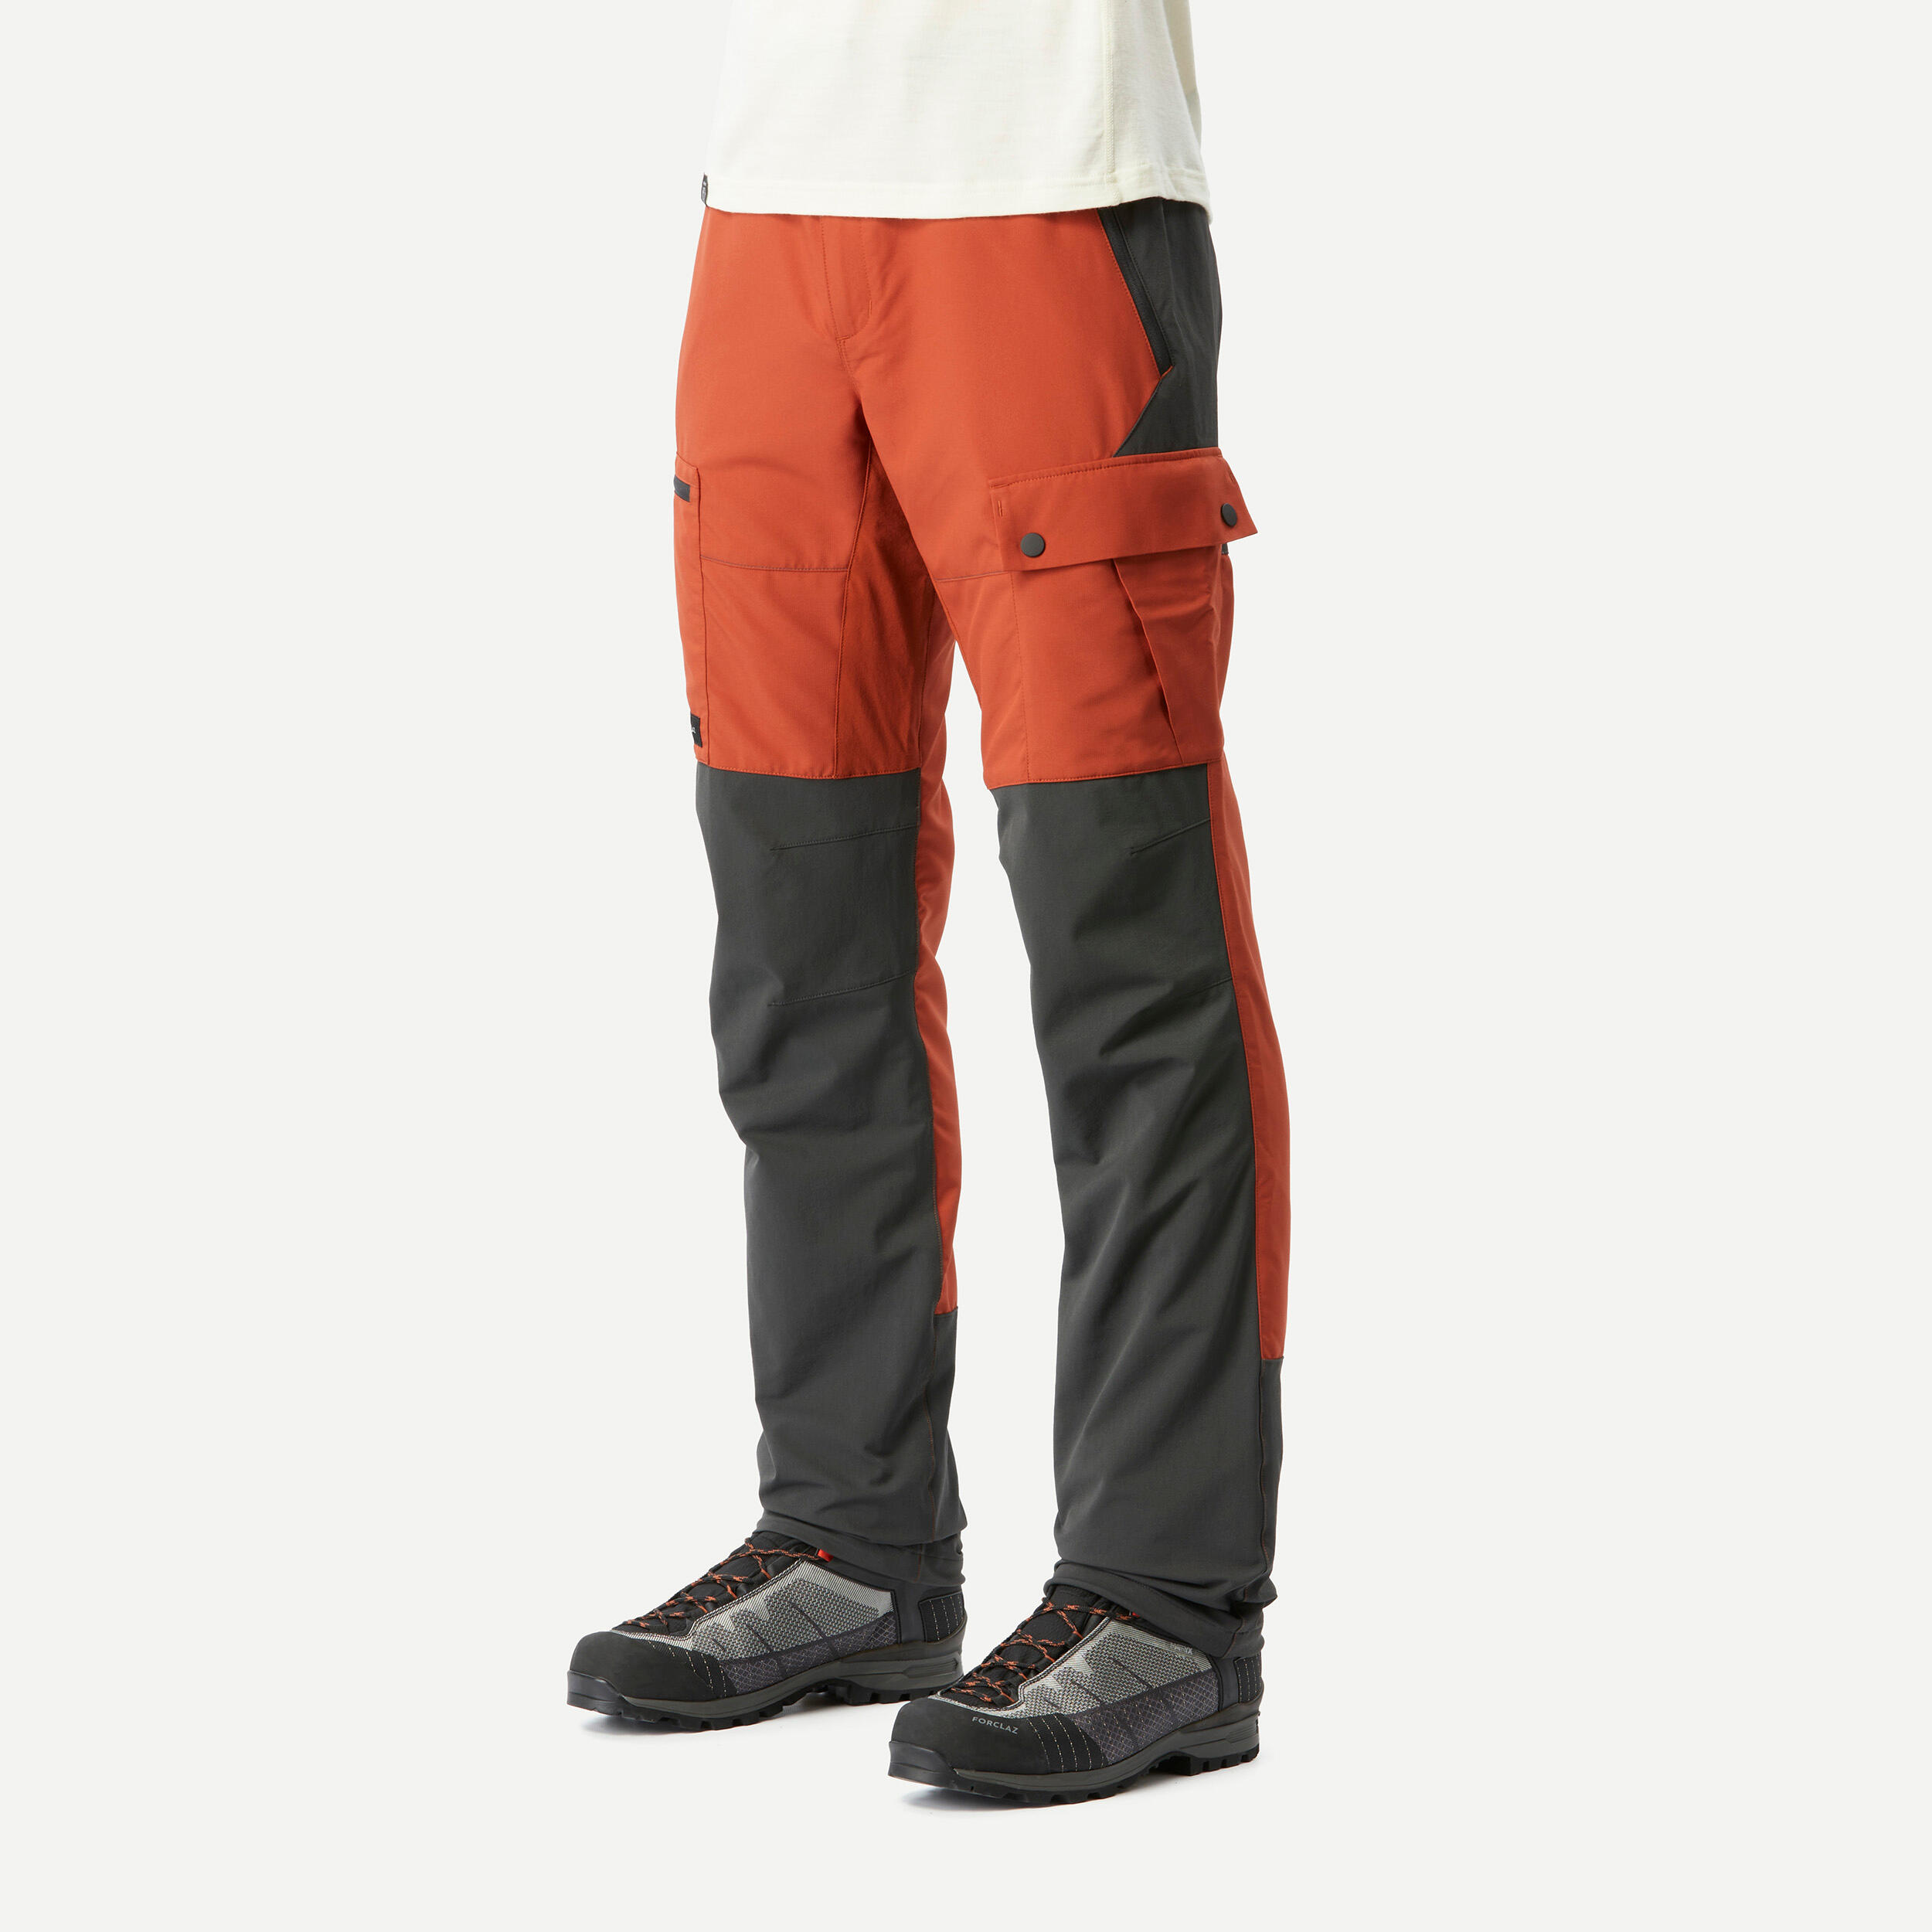 Men's Hiking Pants - MH 500 - Carbon grey, black - Quechua - Decathlon